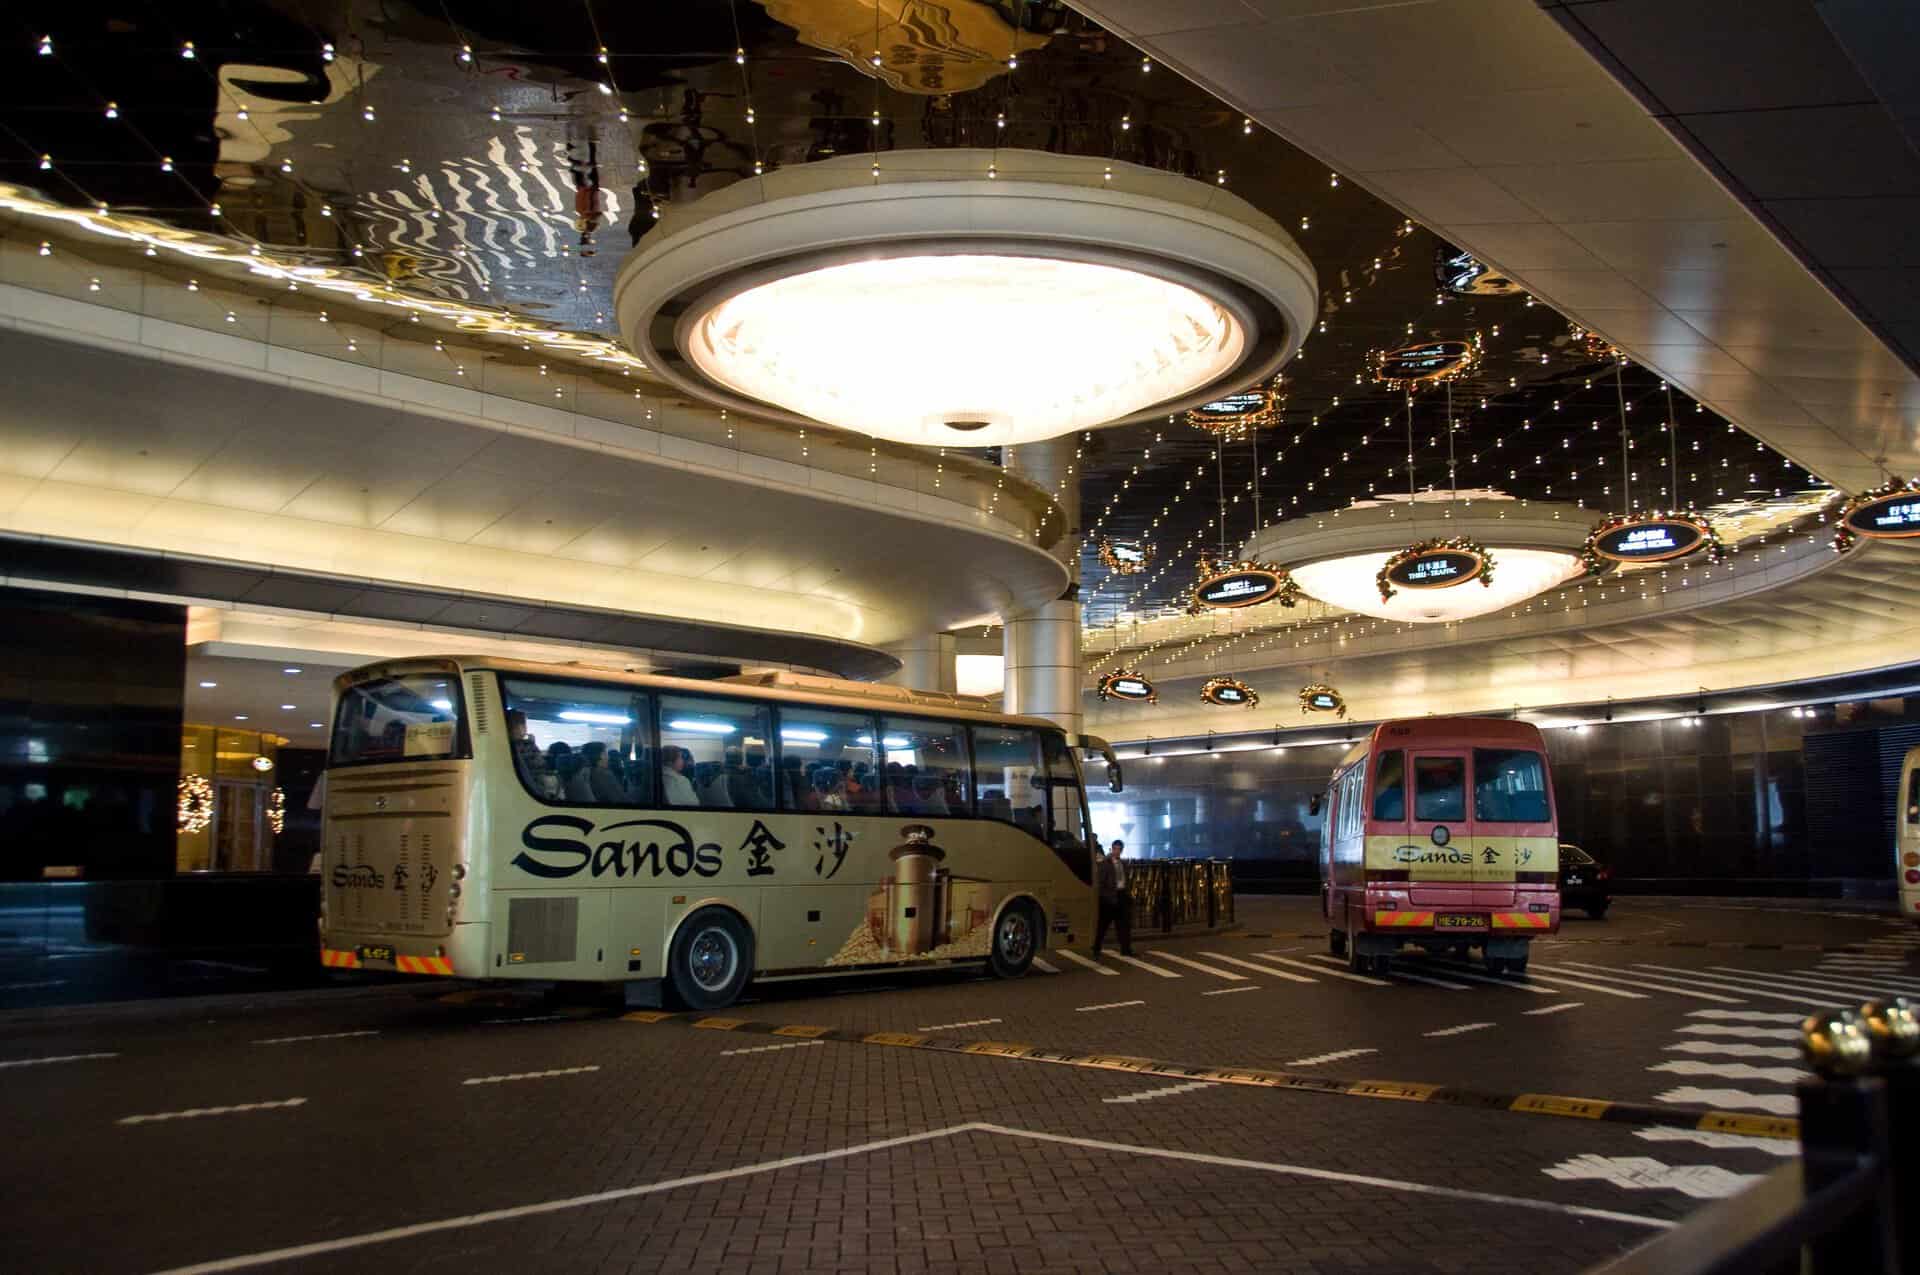 sands-hotel-shuttle-buses